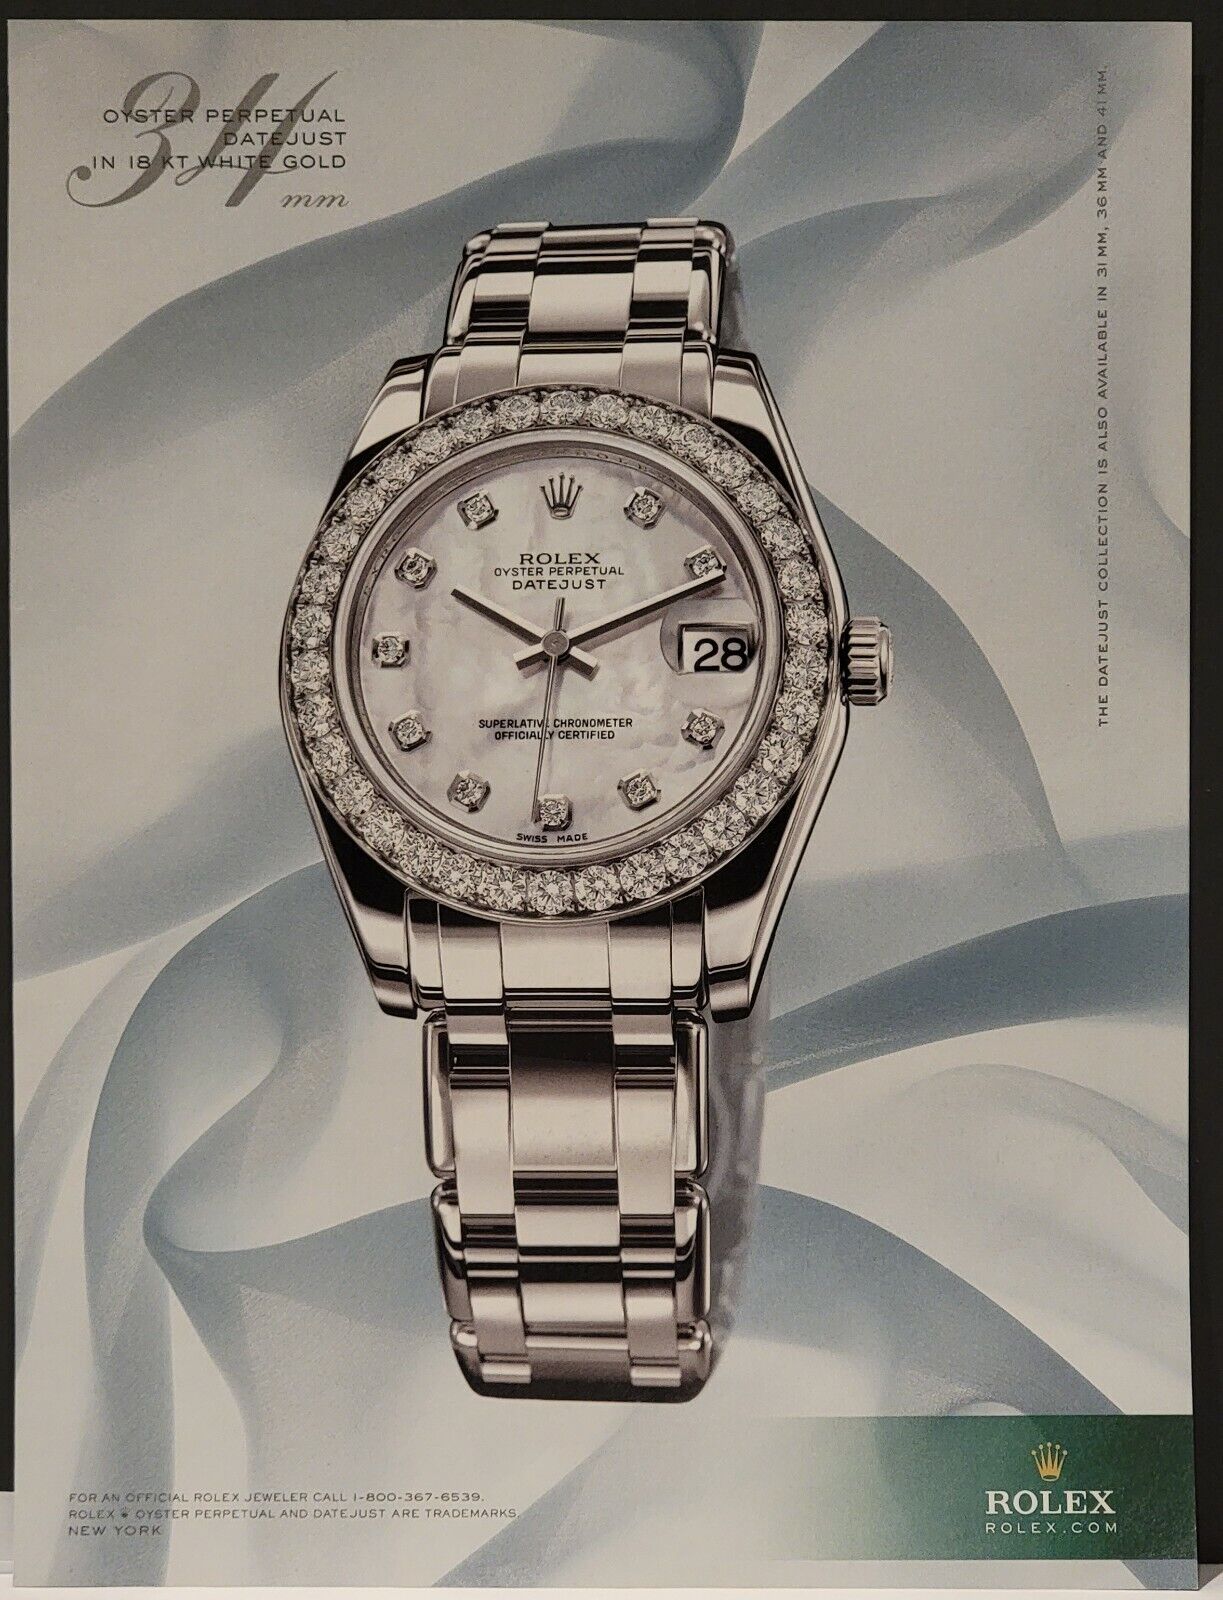 2010 Rolex Watch Print Ad Oyster Perpetual Datejust Superlative Chronometer